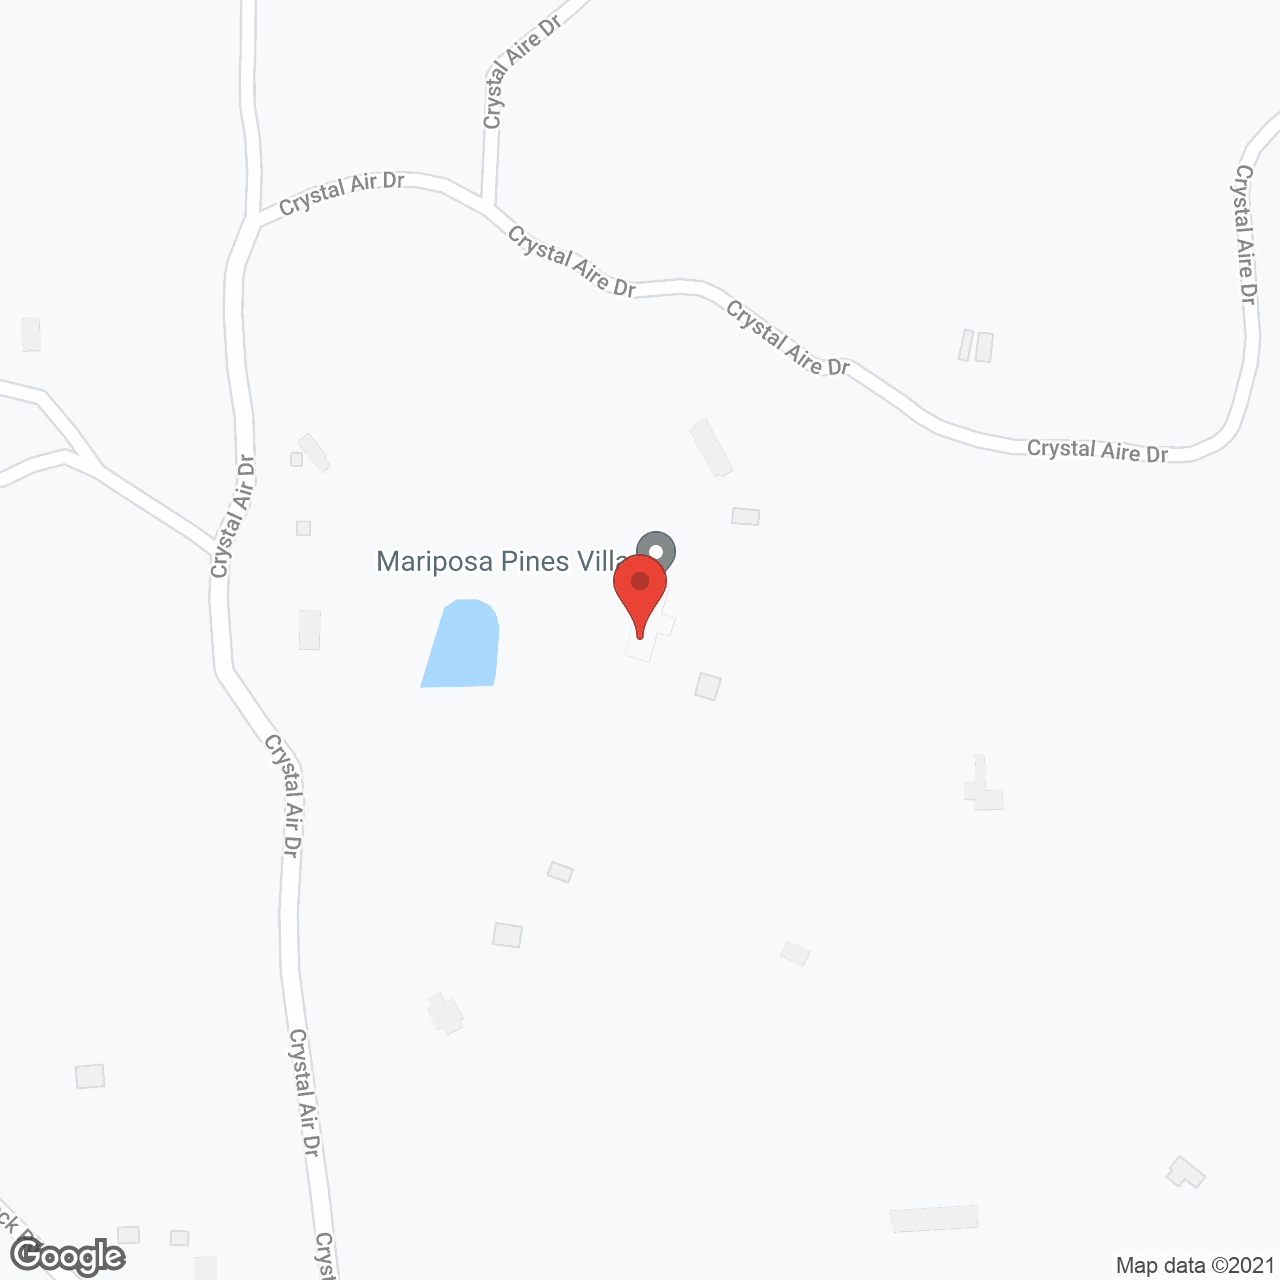 Mariposa Pines Villa in google map